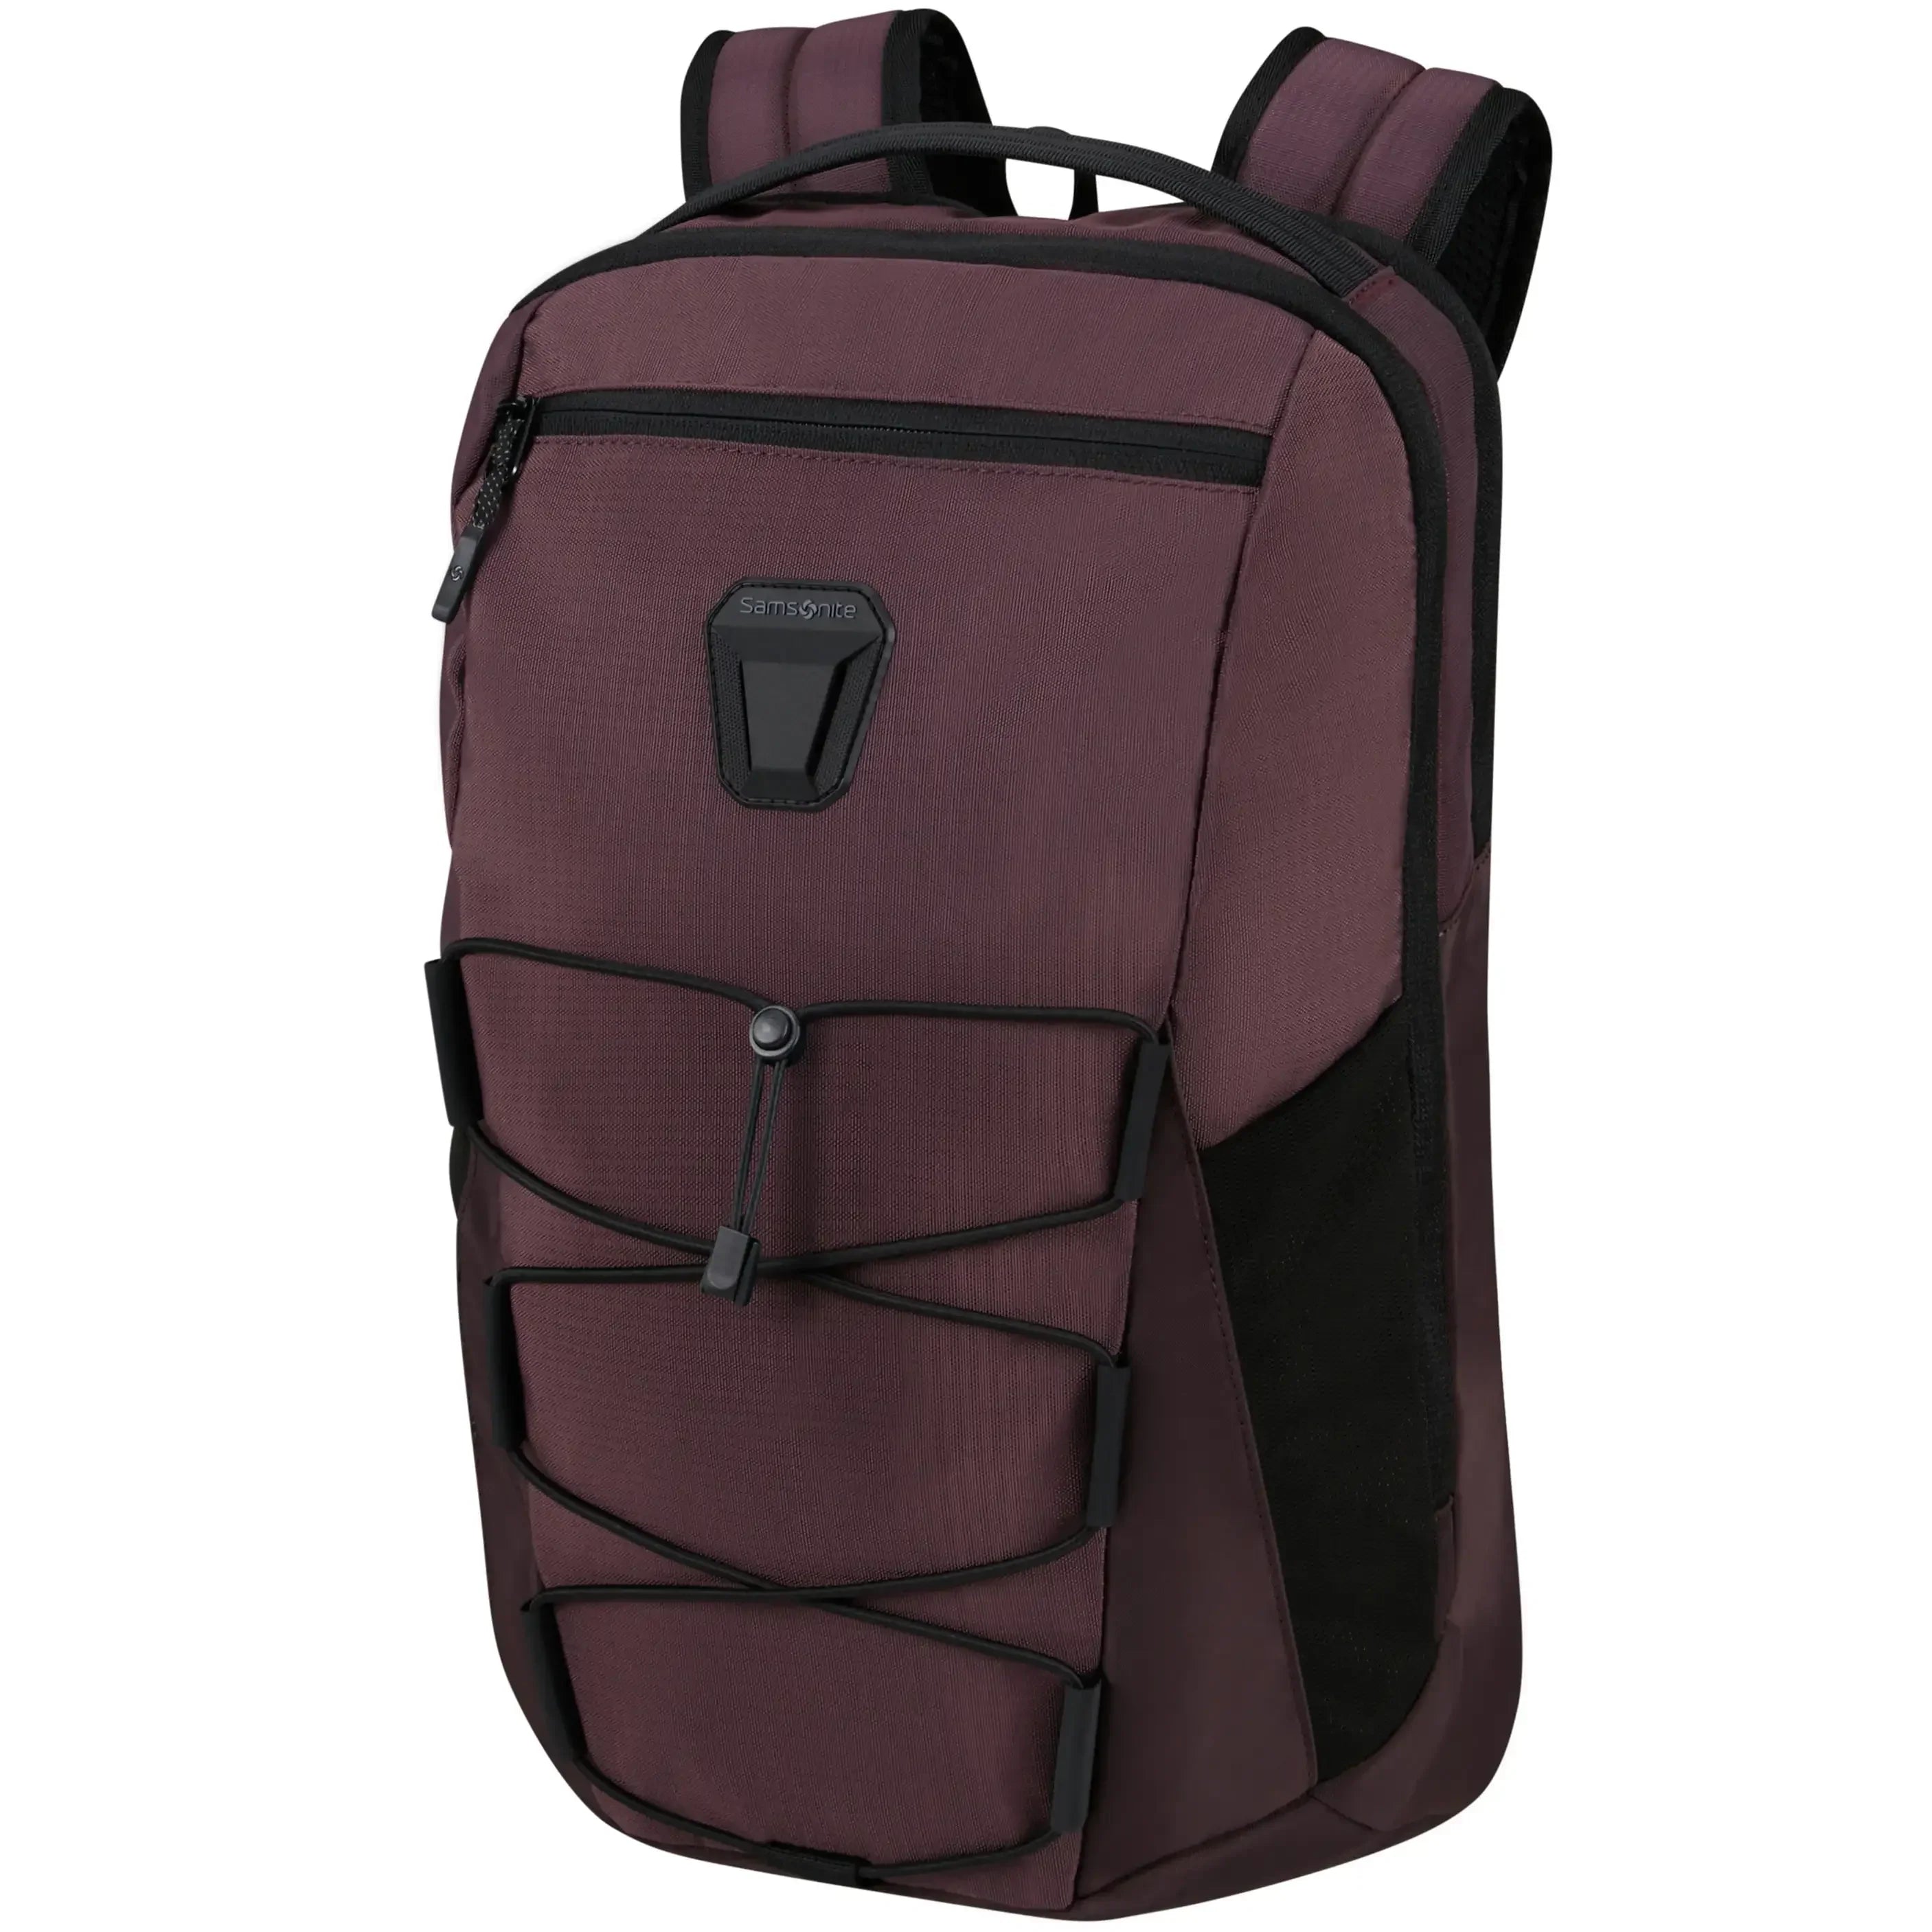 Samsonite Dye-Namic Backpack S 42 cm - grape purple